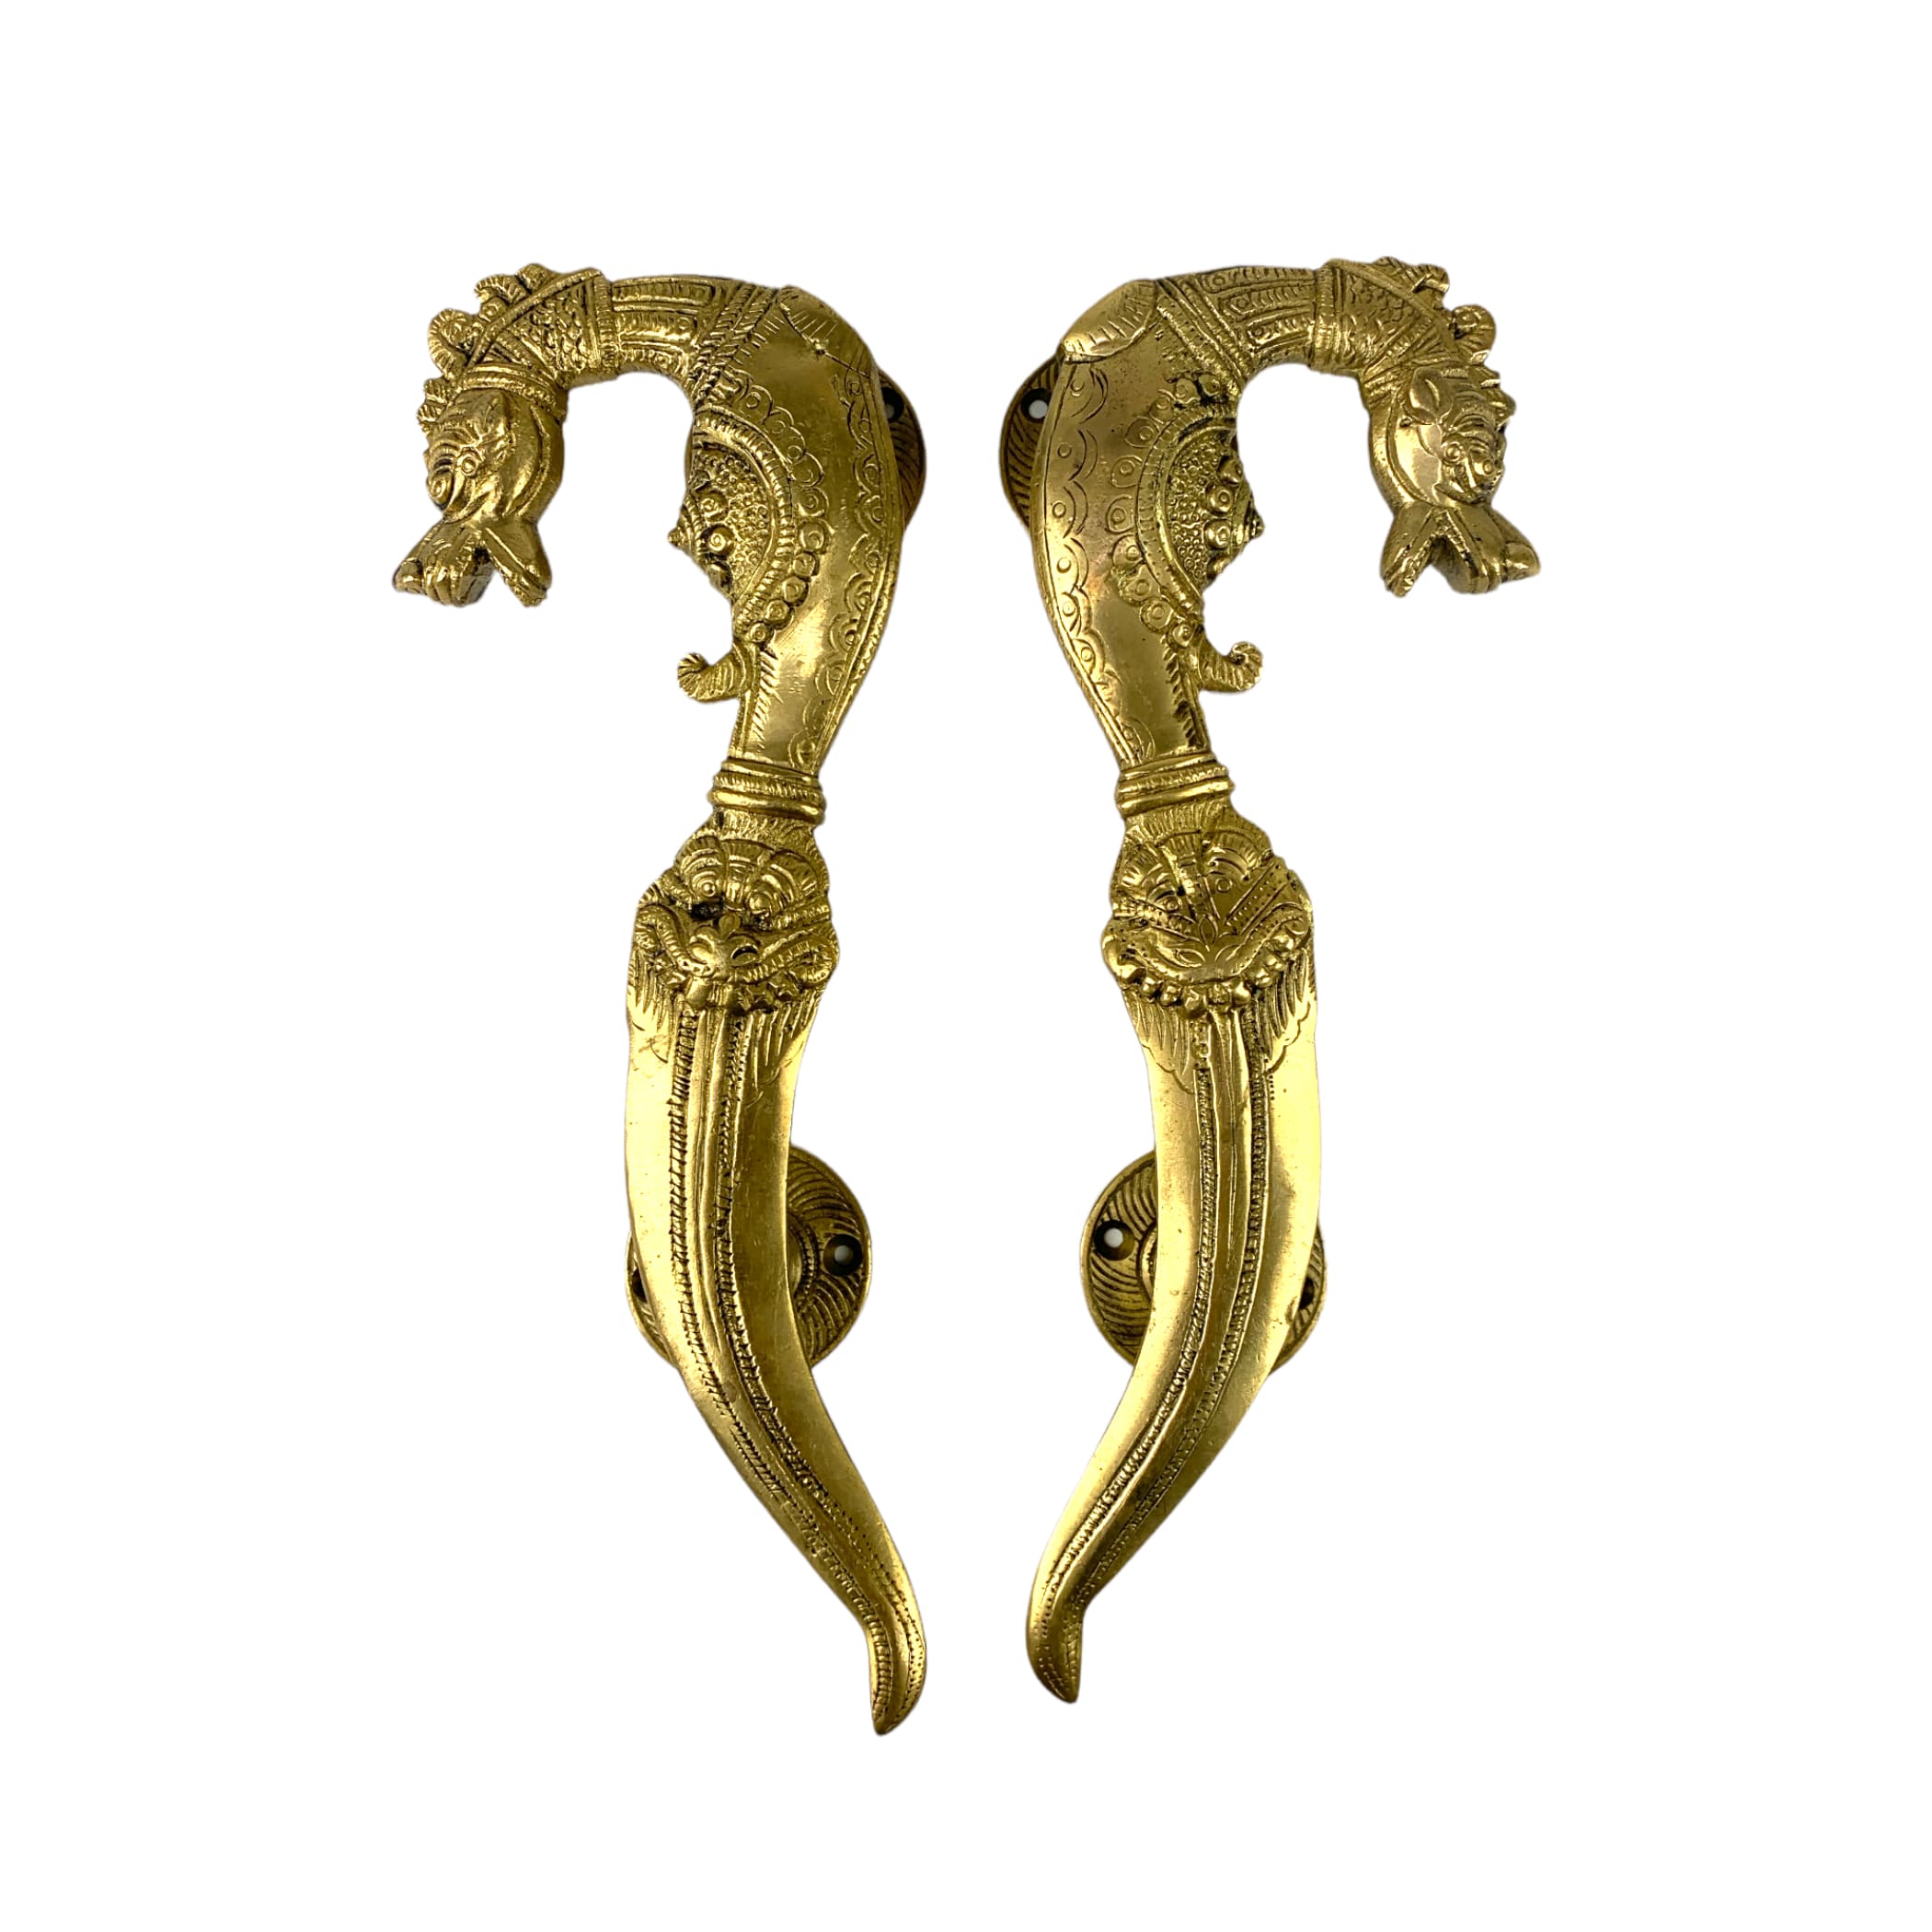 Dragon door pull handle brass handles 8 inches,handles for